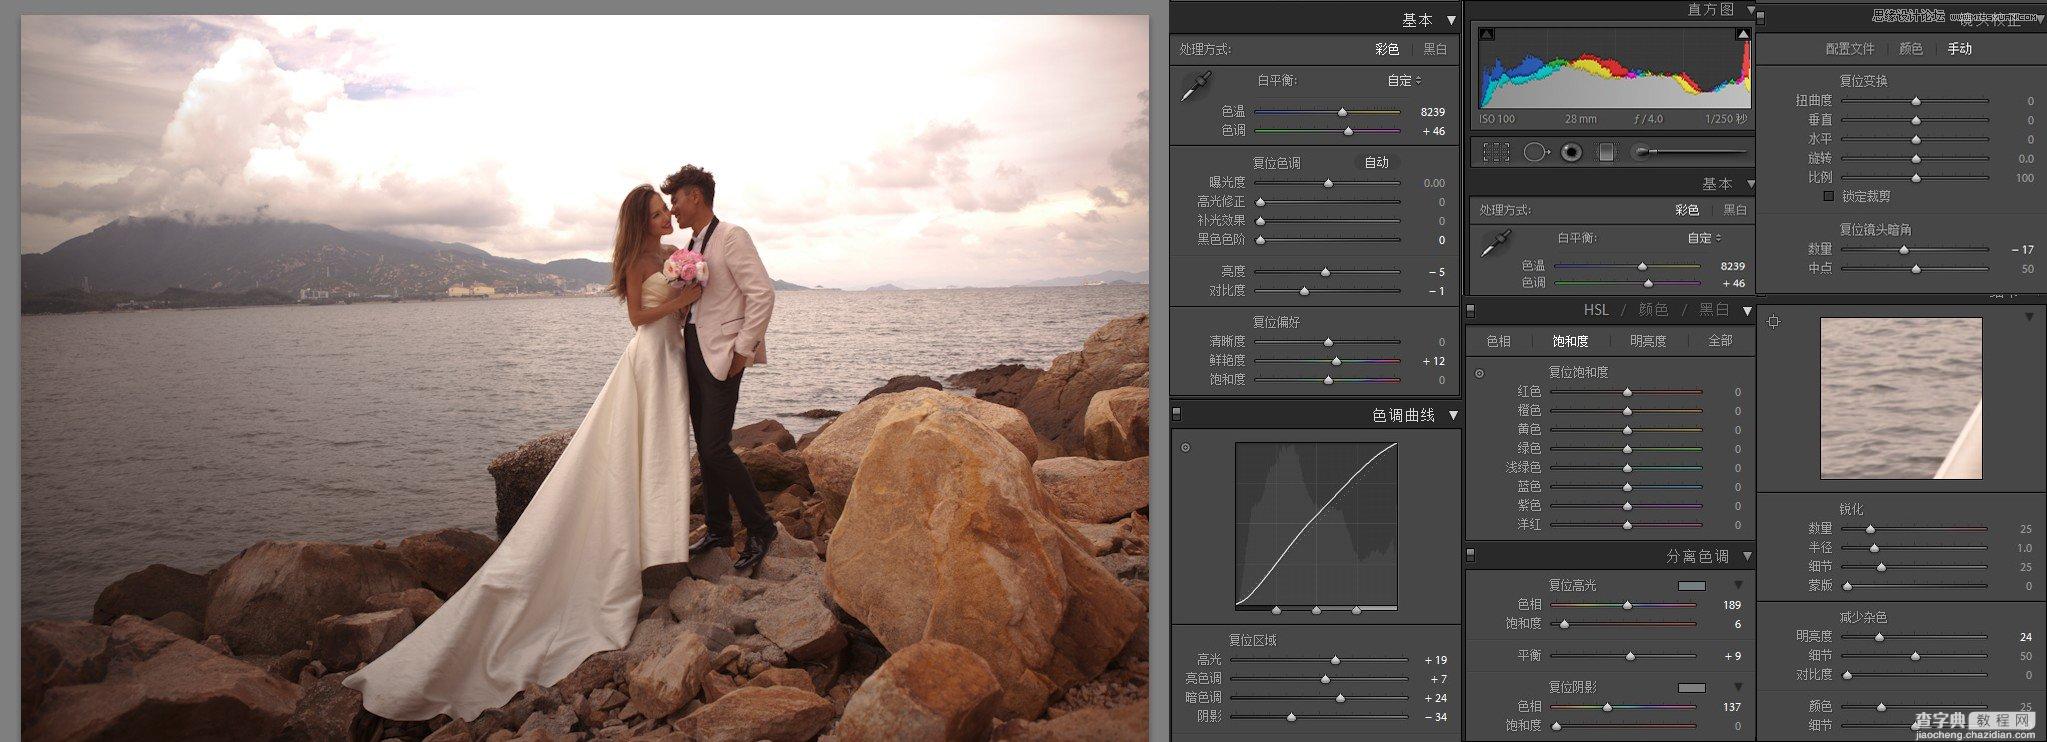 Lightroom调出暗色质感效果的海边婚纱照片3